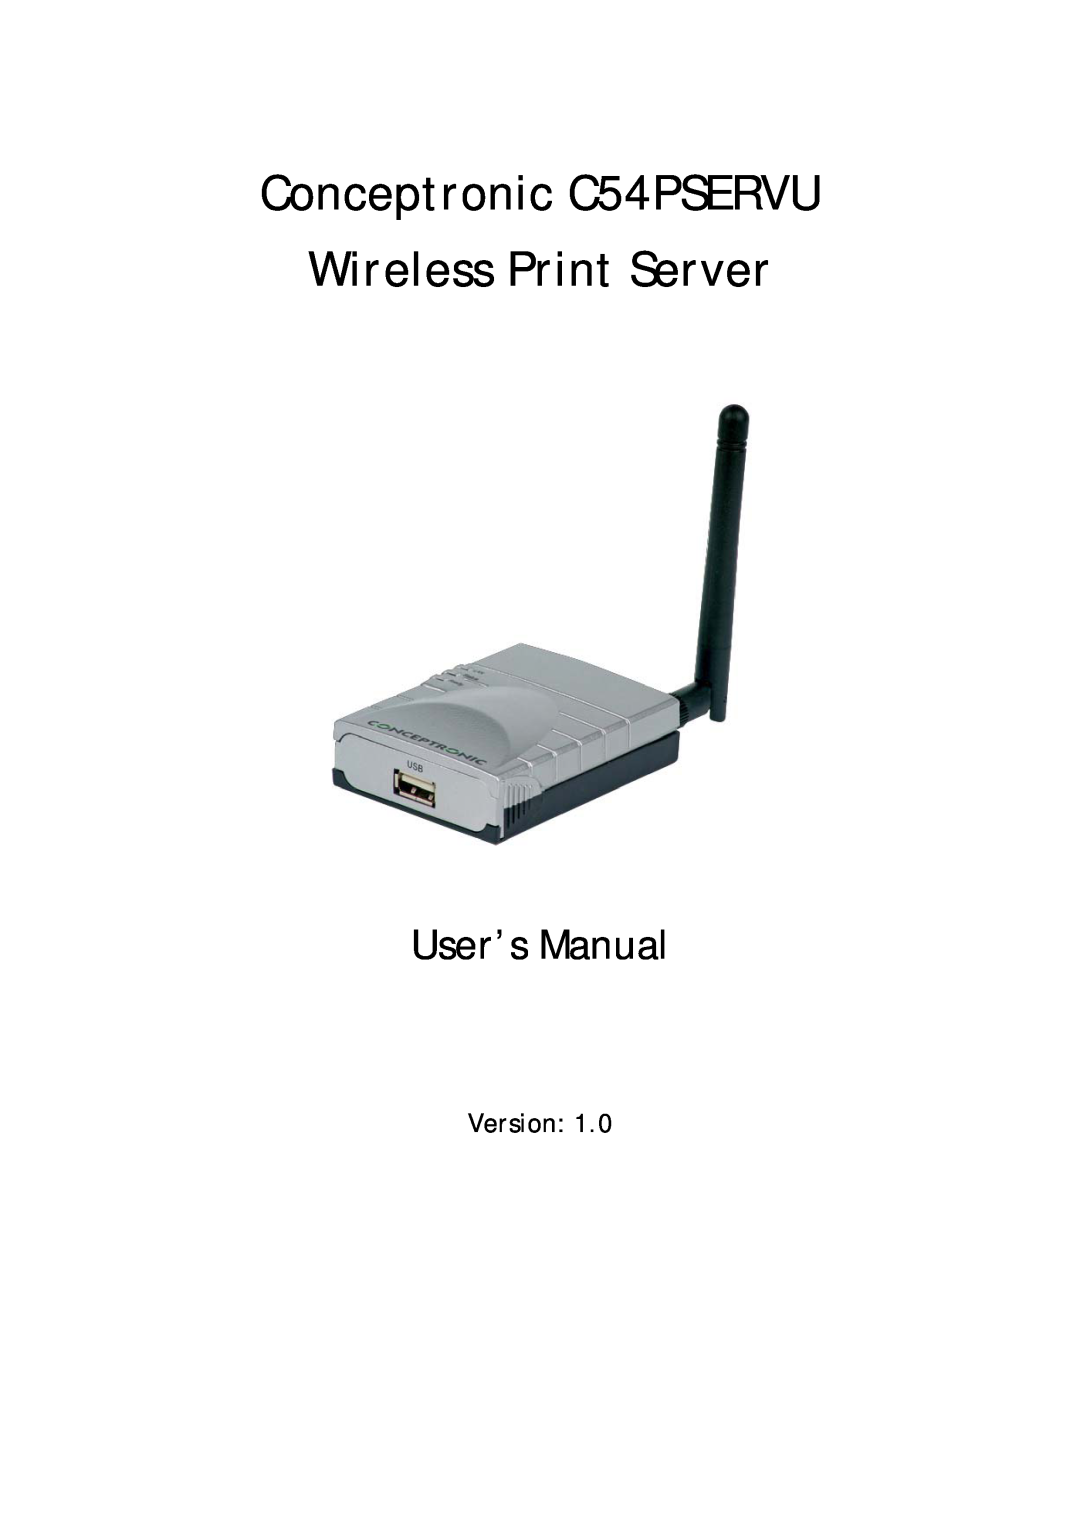 Conceptronic user manual Version, Conceptronic C54PSERVU, Wireless Print Server, User’s Manual 